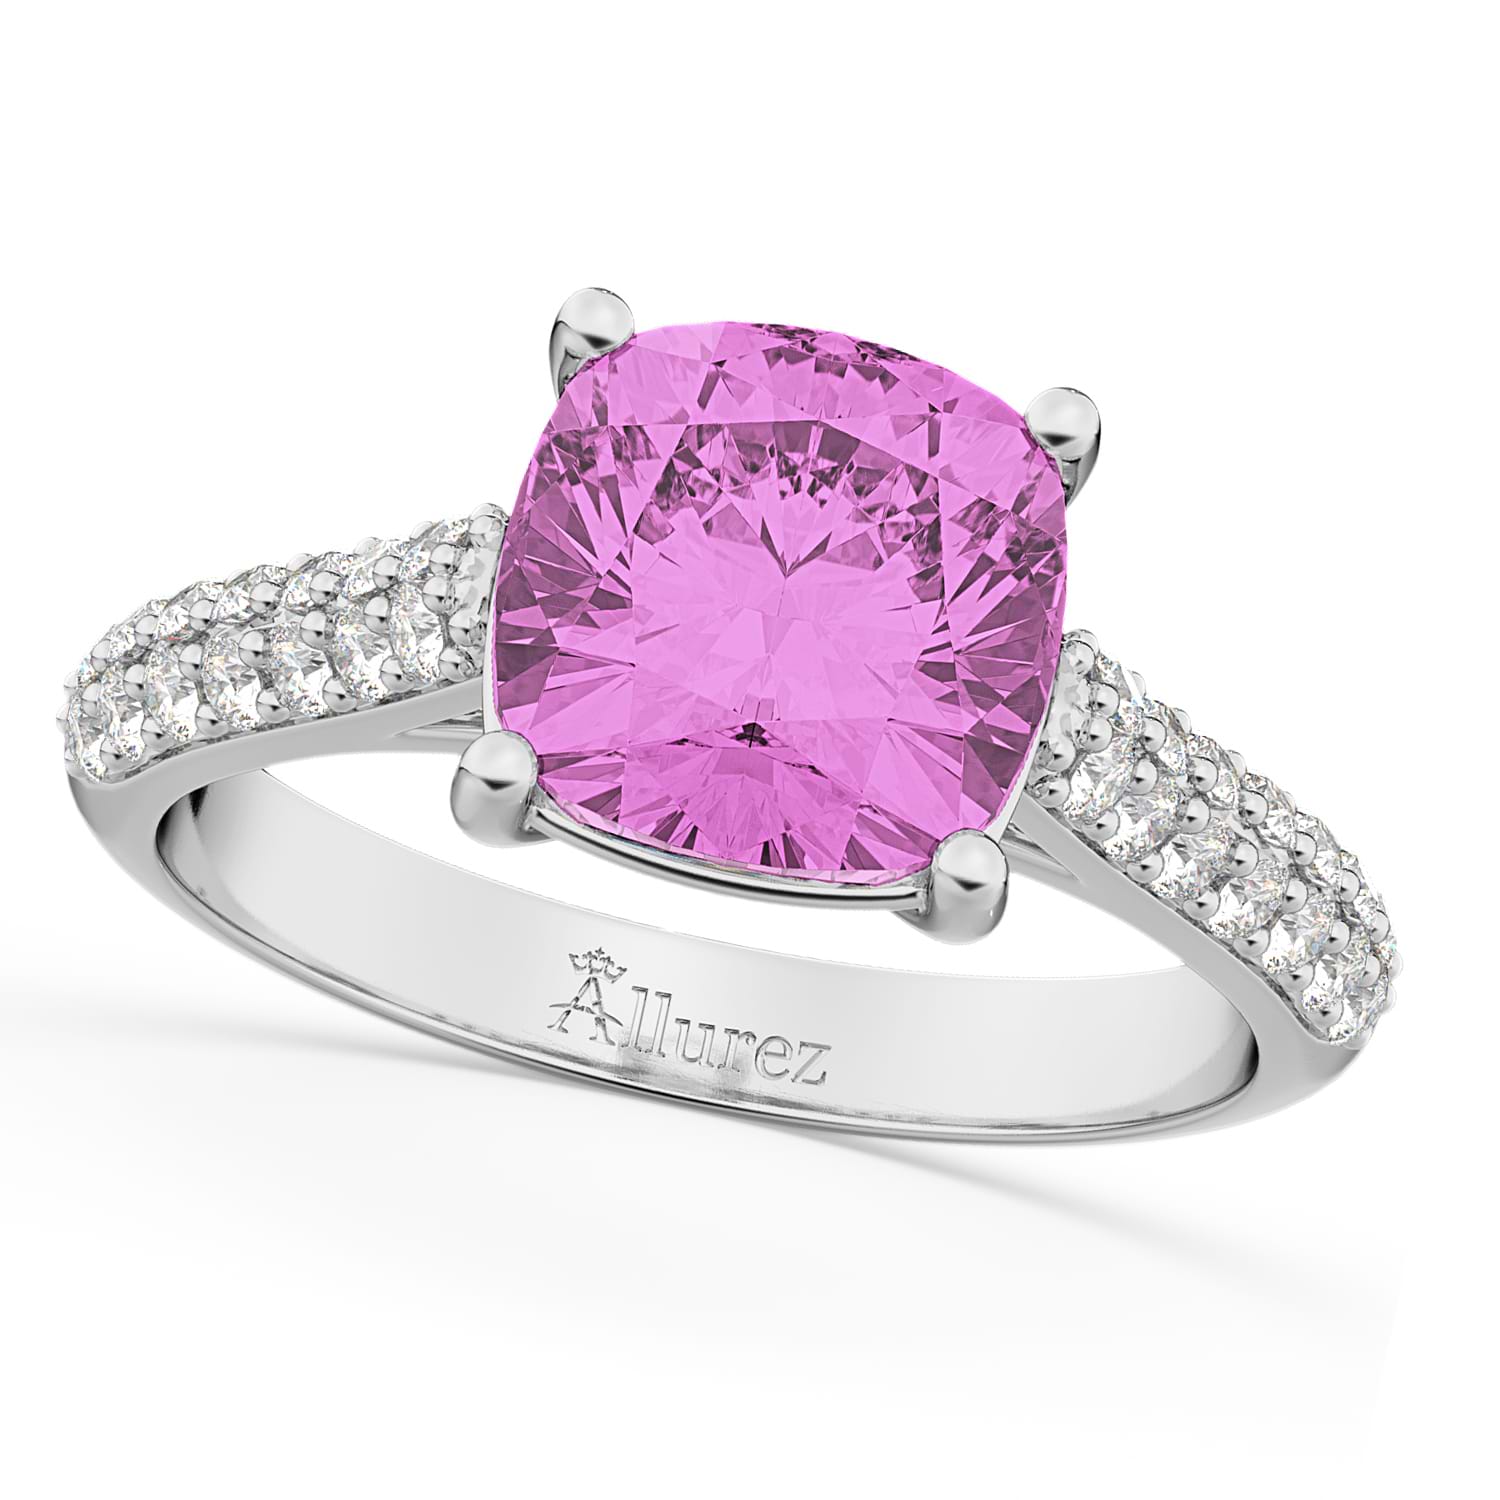 Cushion Cut Pink Sapphire & Diamond Ring 14k White Gold (4.42ct)